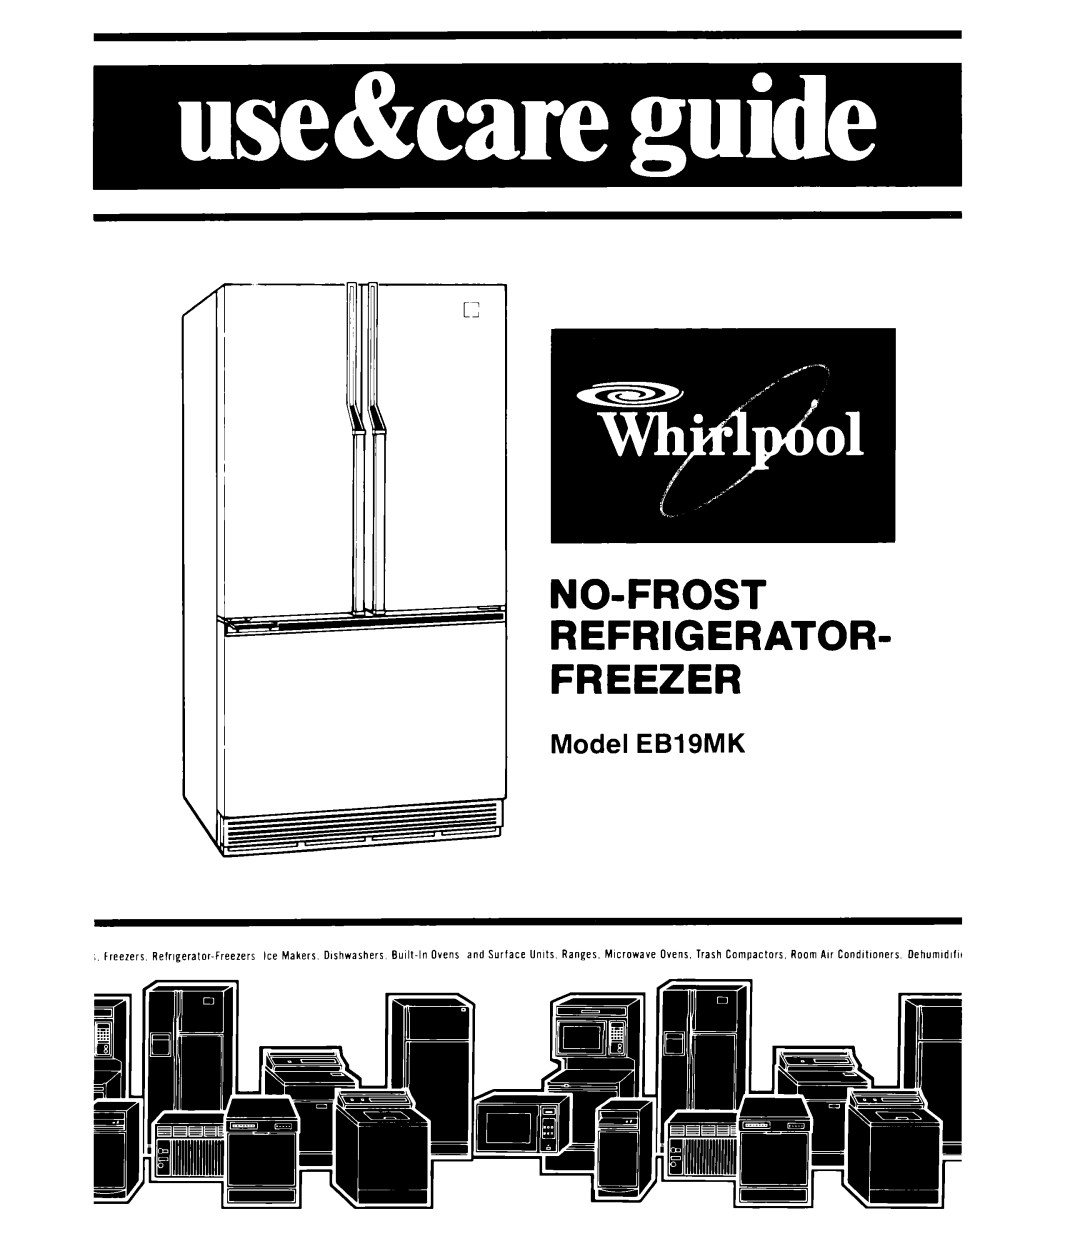 Whirlpool EB19MK manual No-Frost Refrigerator Freezer, Model EBISMK 